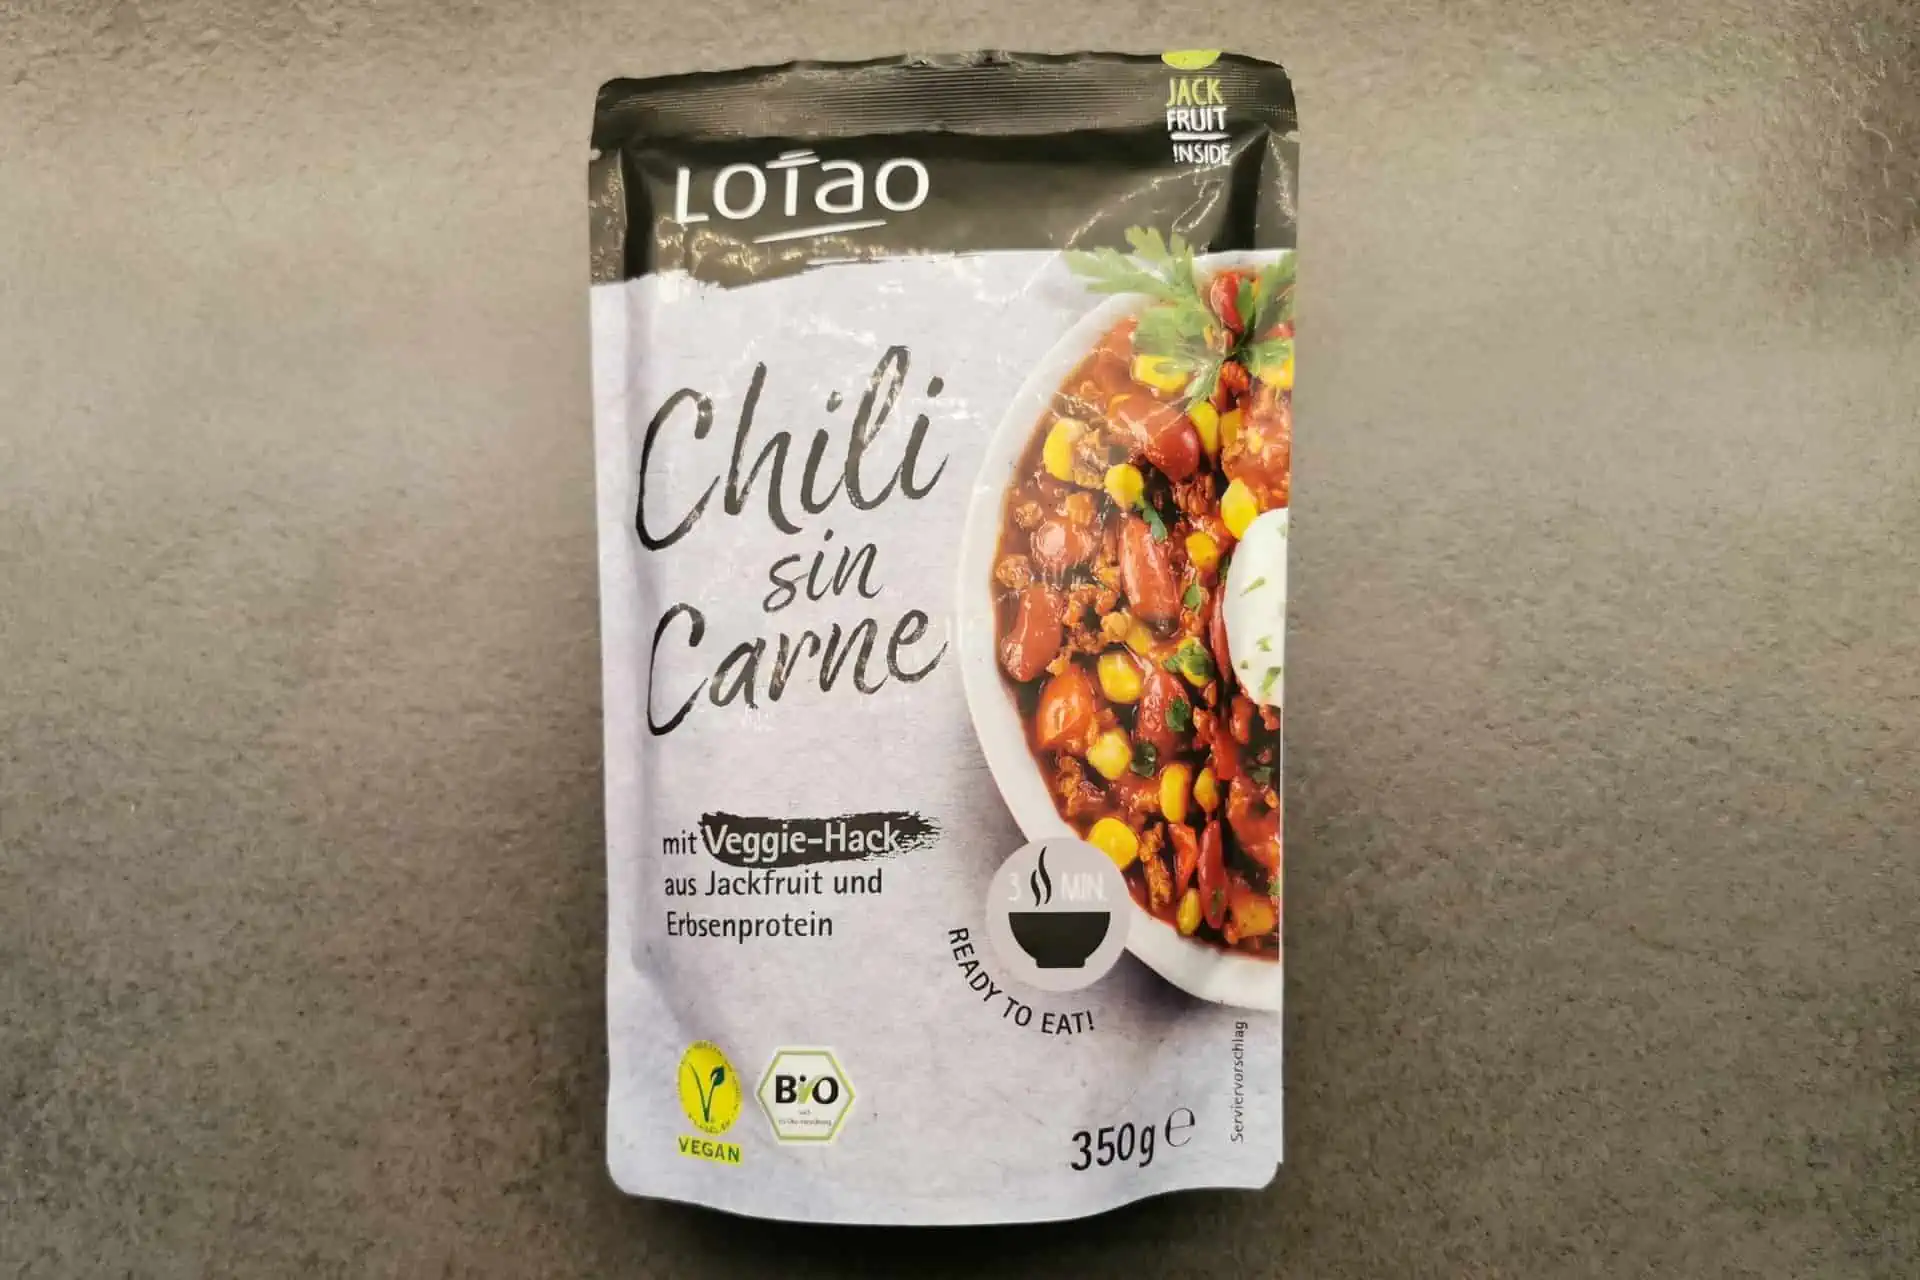 Lotao: Chili sin Carne